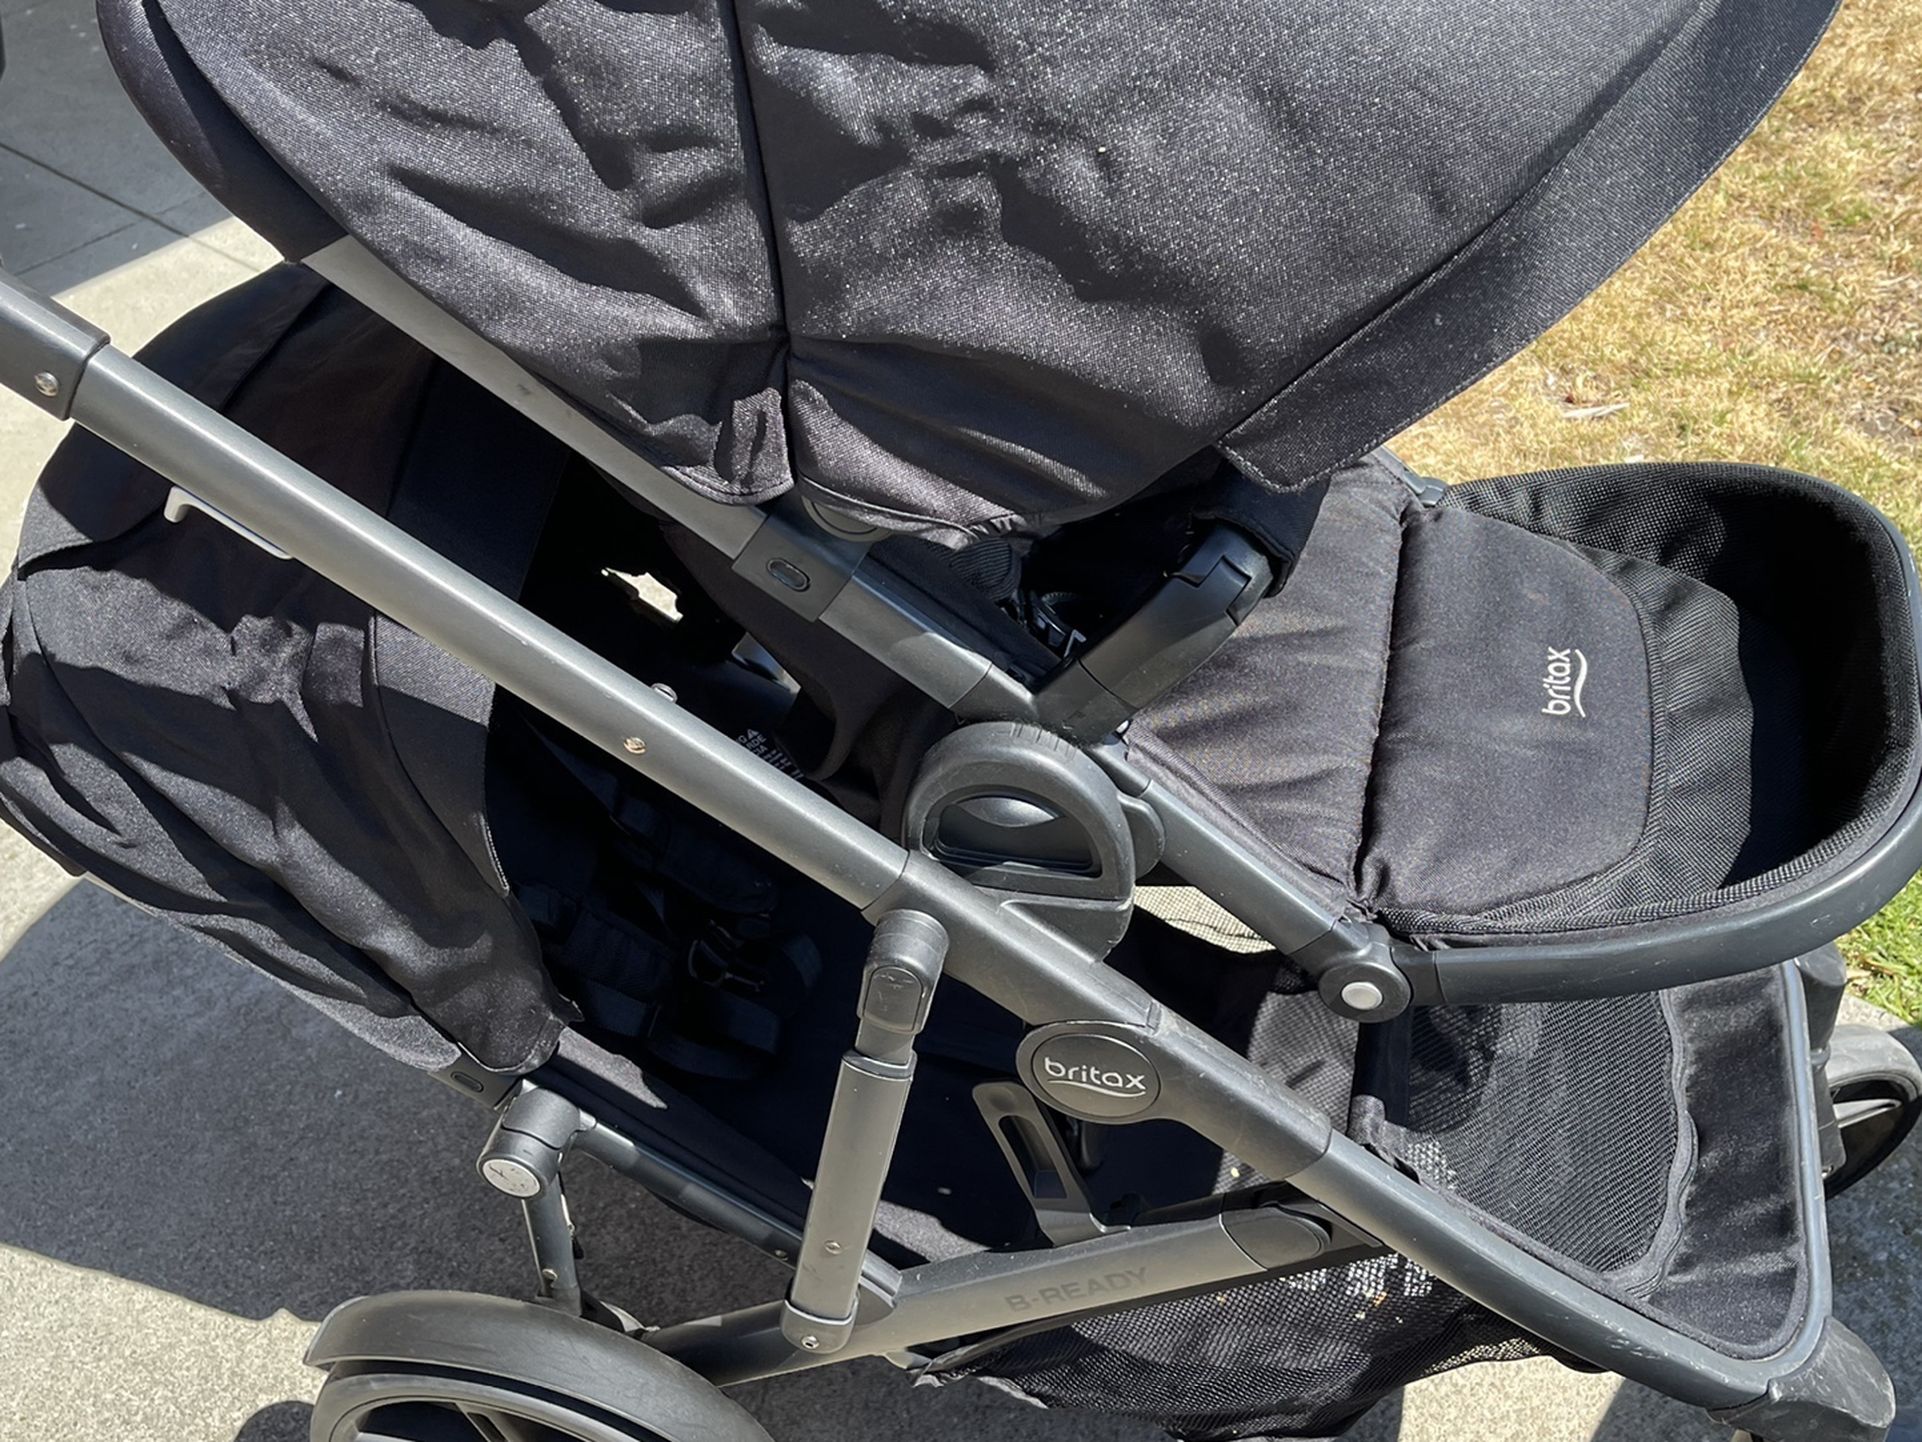 Britax Double stroller 